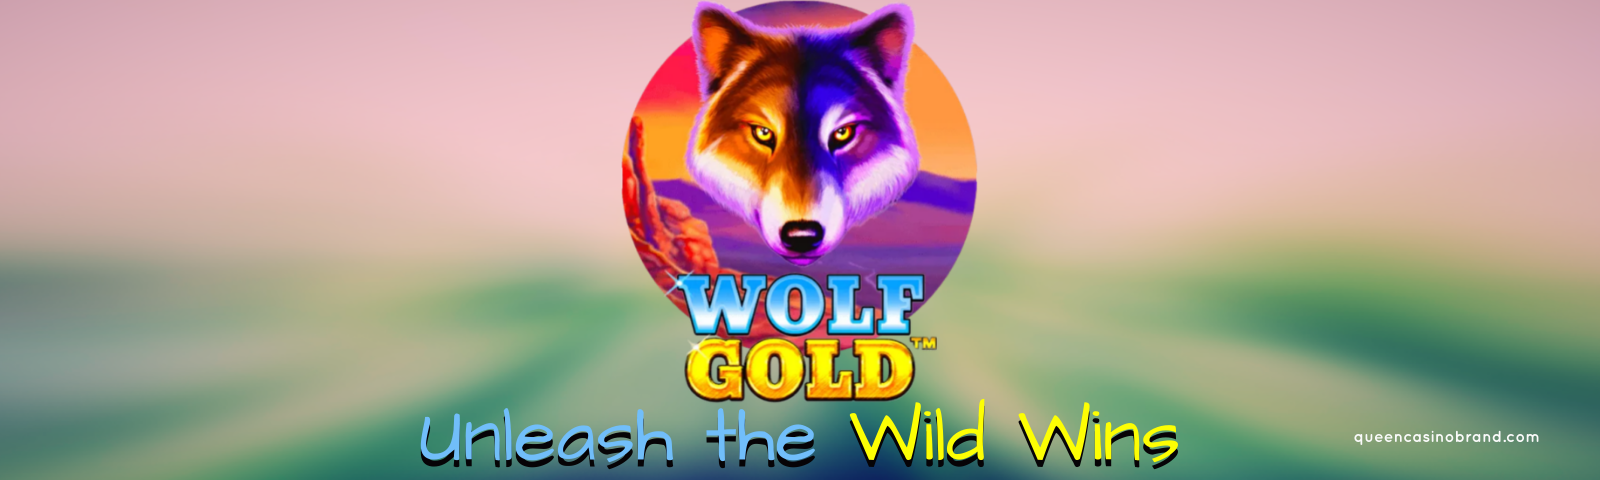 Wolf Gold Slot